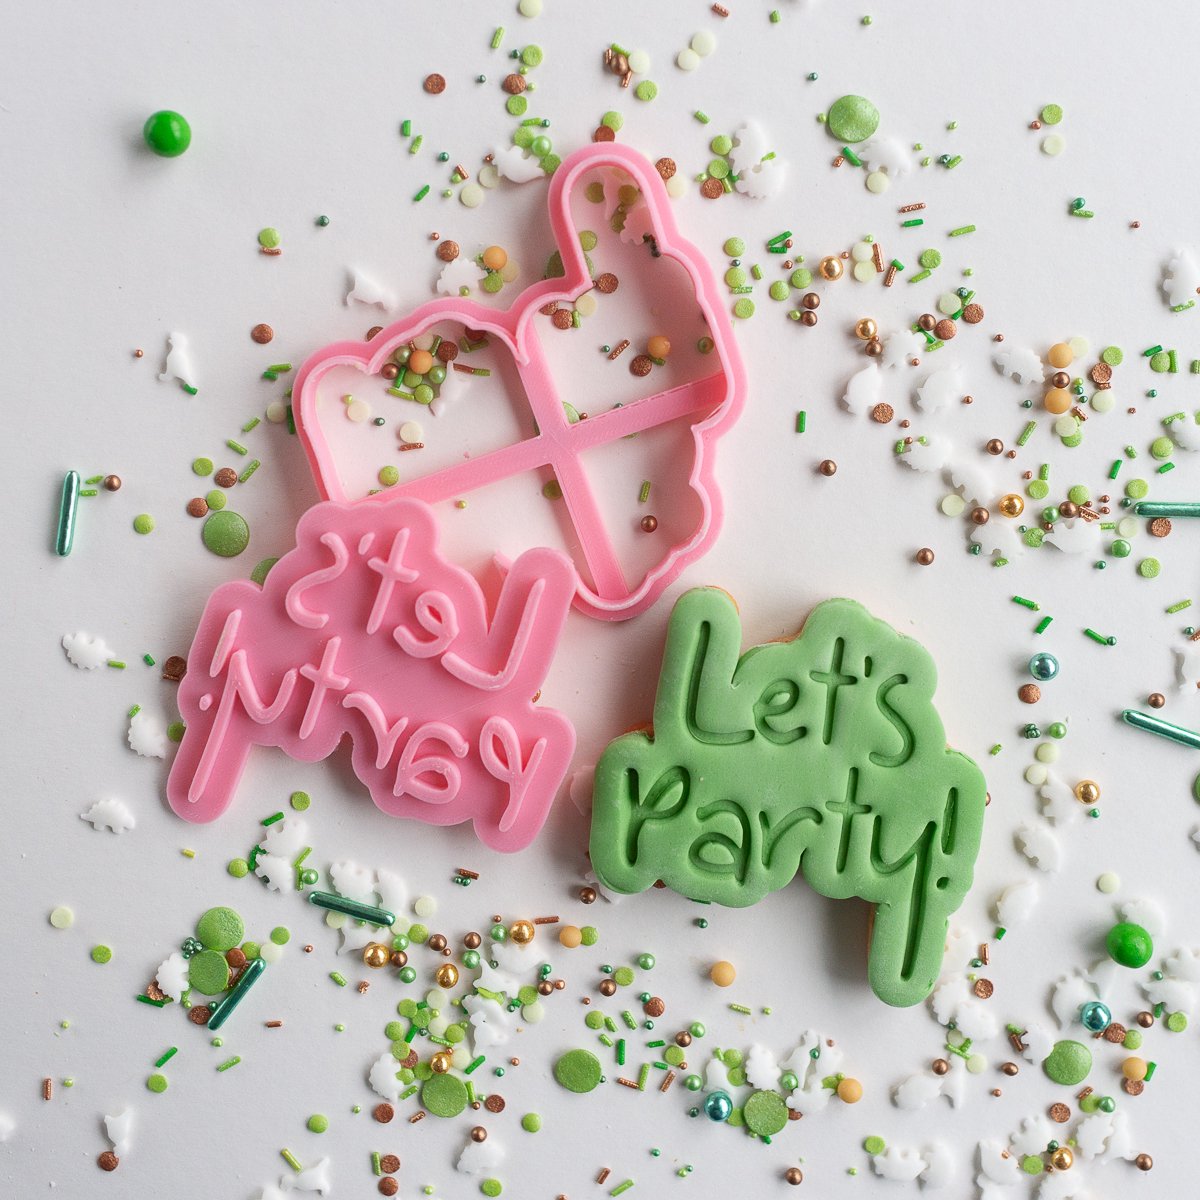 Let's Party! - Stamp met cookie cutter | Dinosaurus collectie